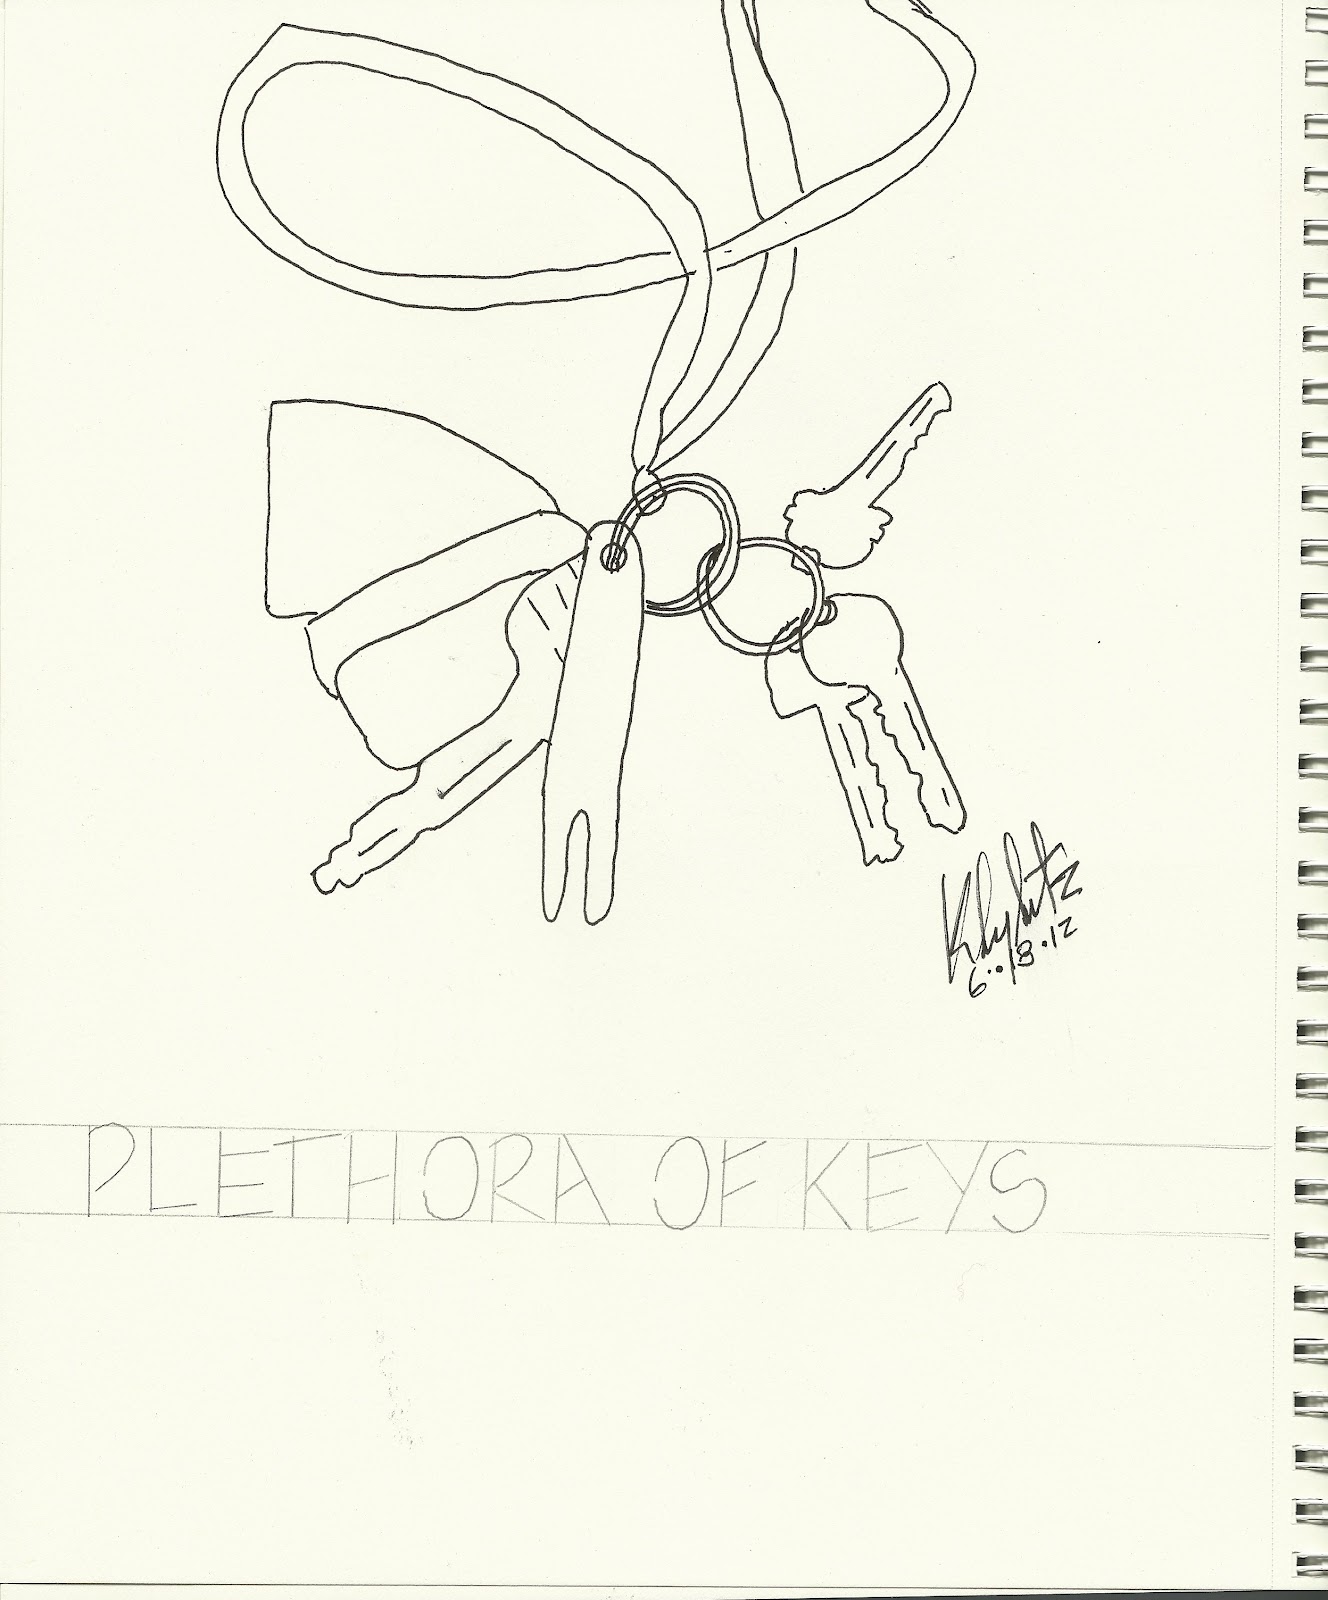 key sketch